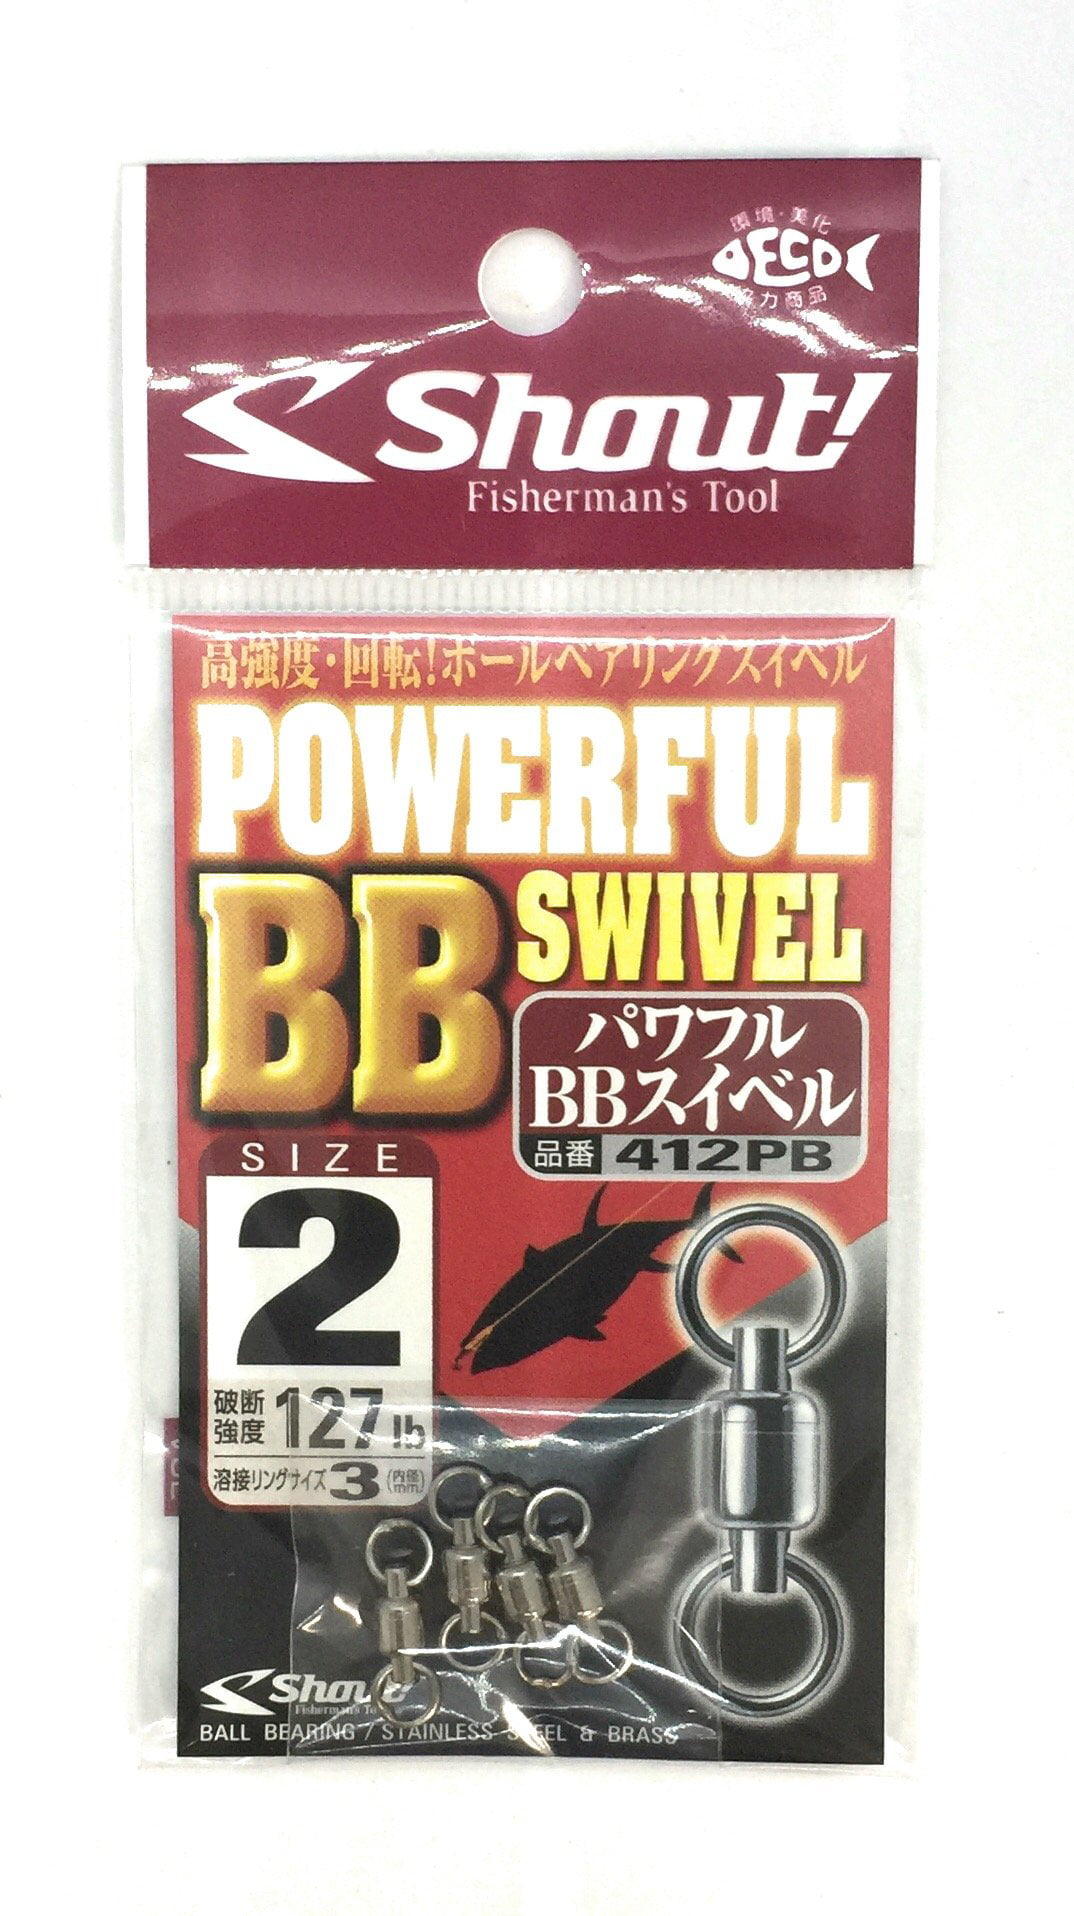 Shout! Powerful BB Swivel 412PB Saltwater Fishing Swivel - Walmart.com